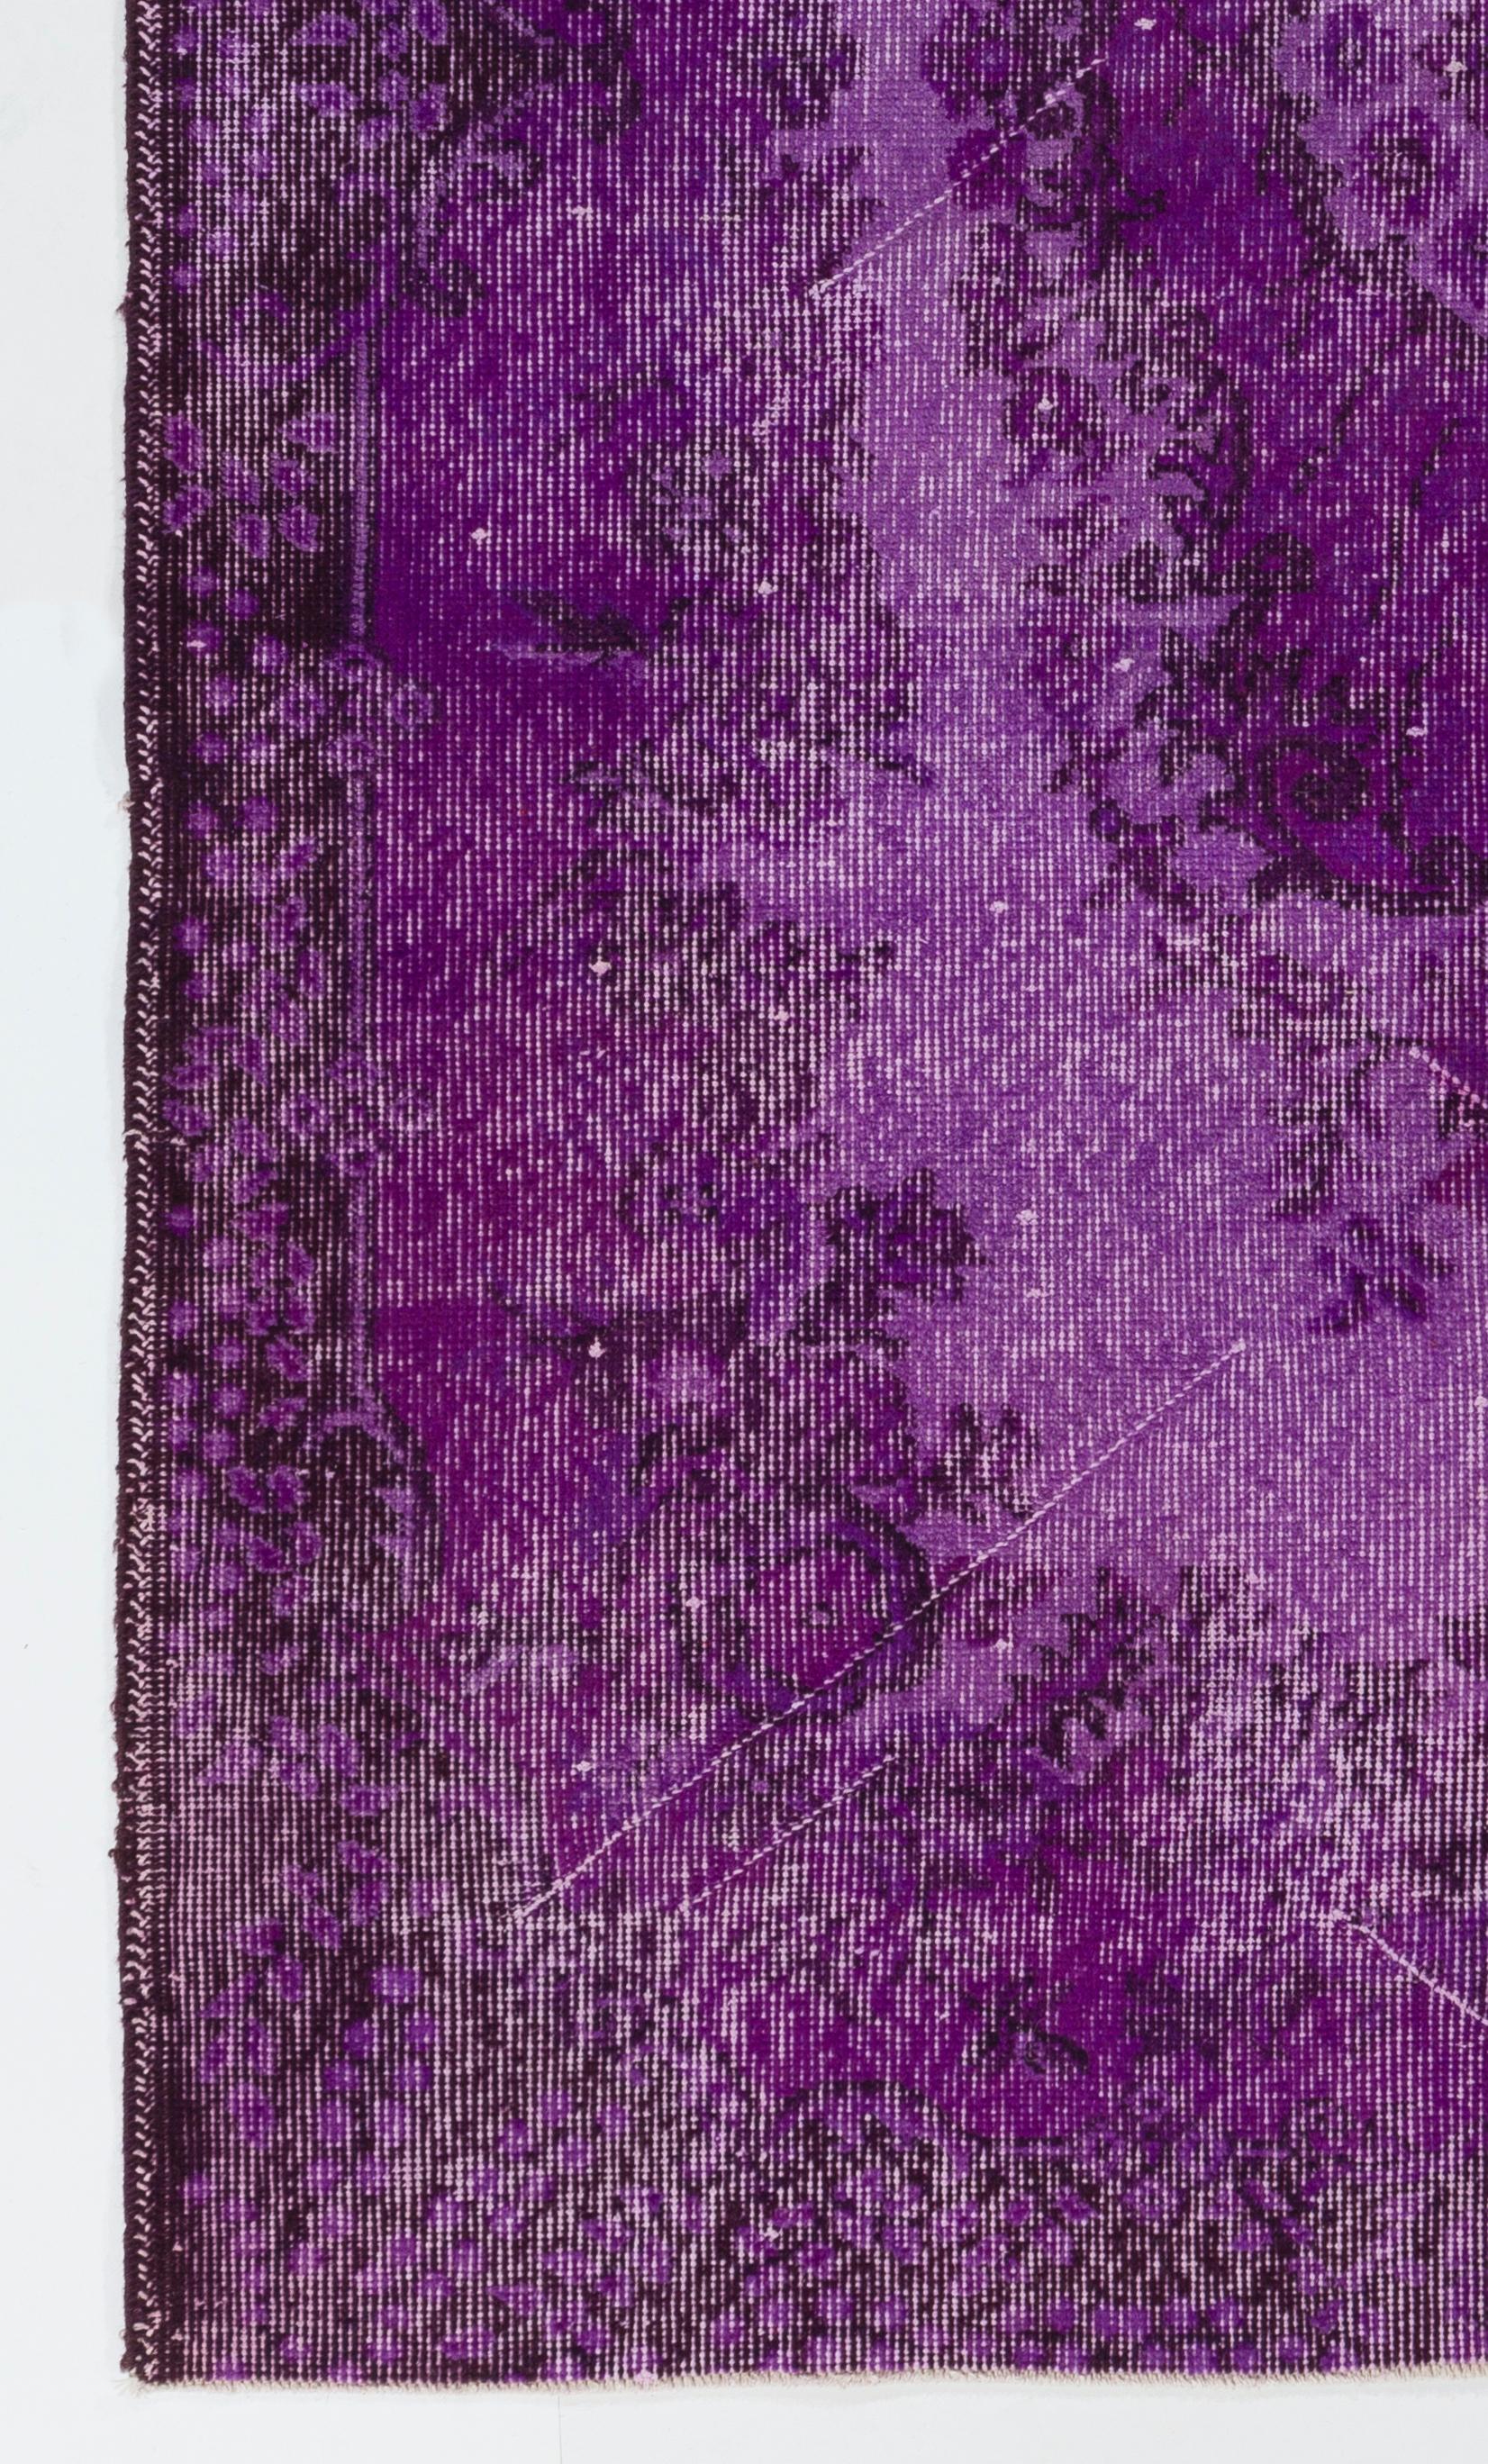 Hand-Woven 4x6.8 Ft Handmade Vintage Turkish Rug in Purple, Modern Baroque Design Carpet